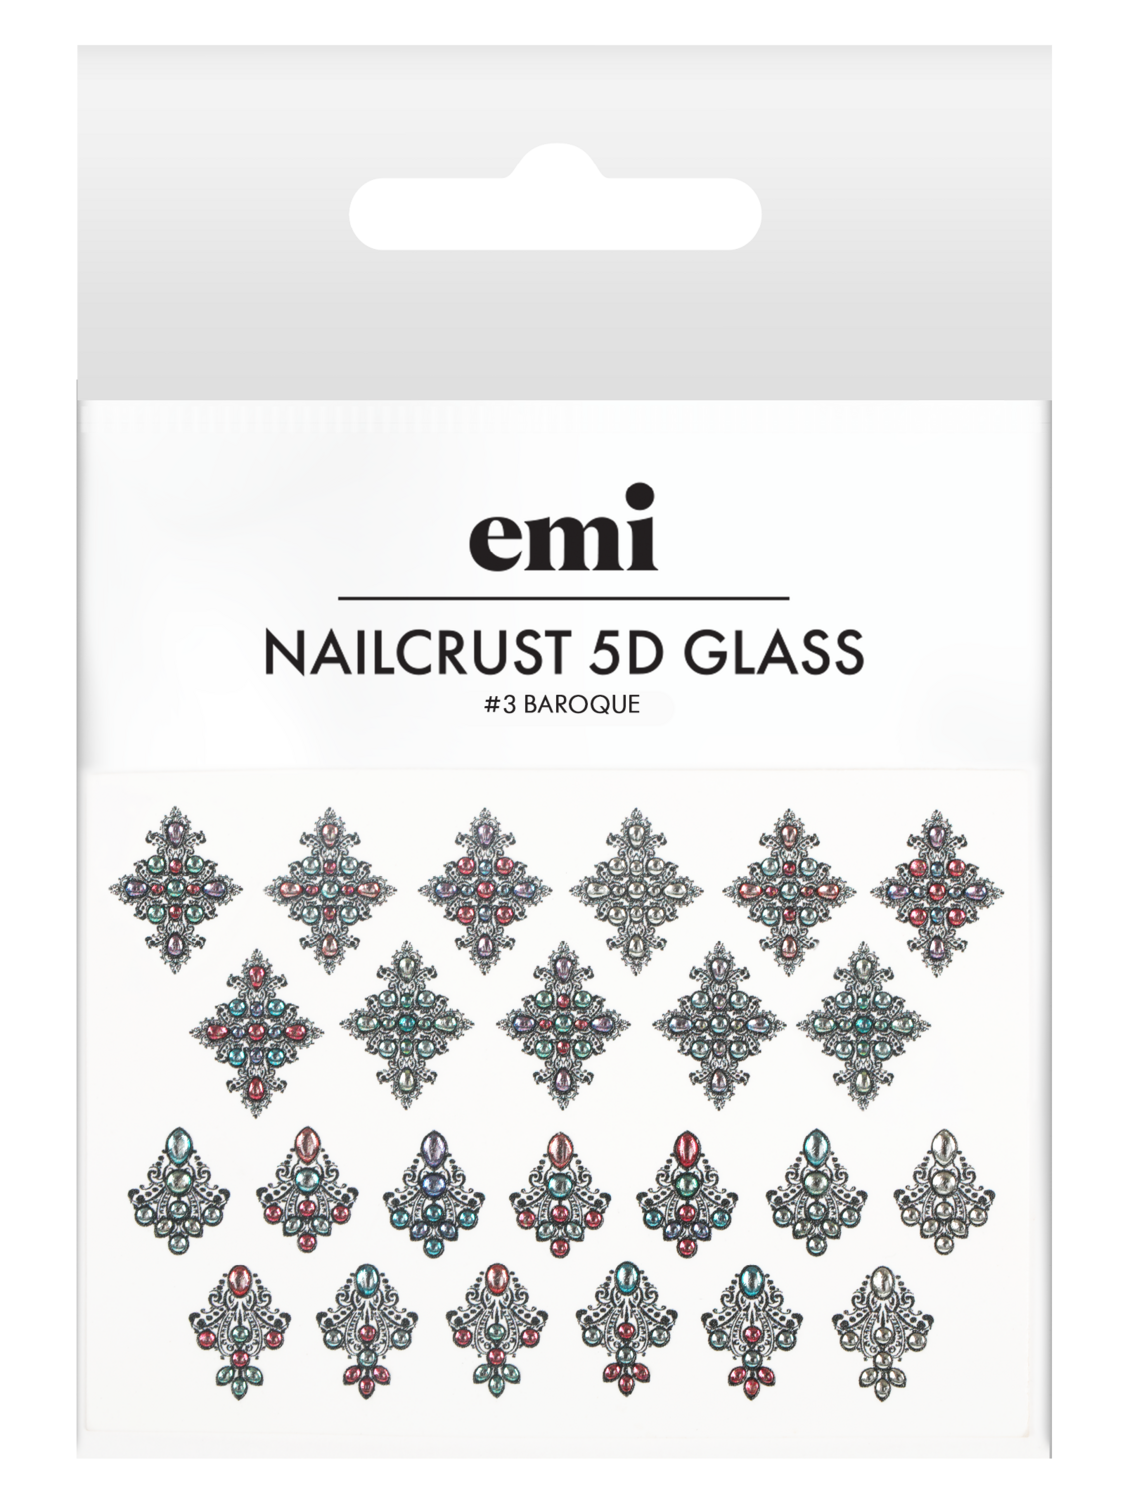 NAILCRUST 5D GLASS No. 3 Baroque